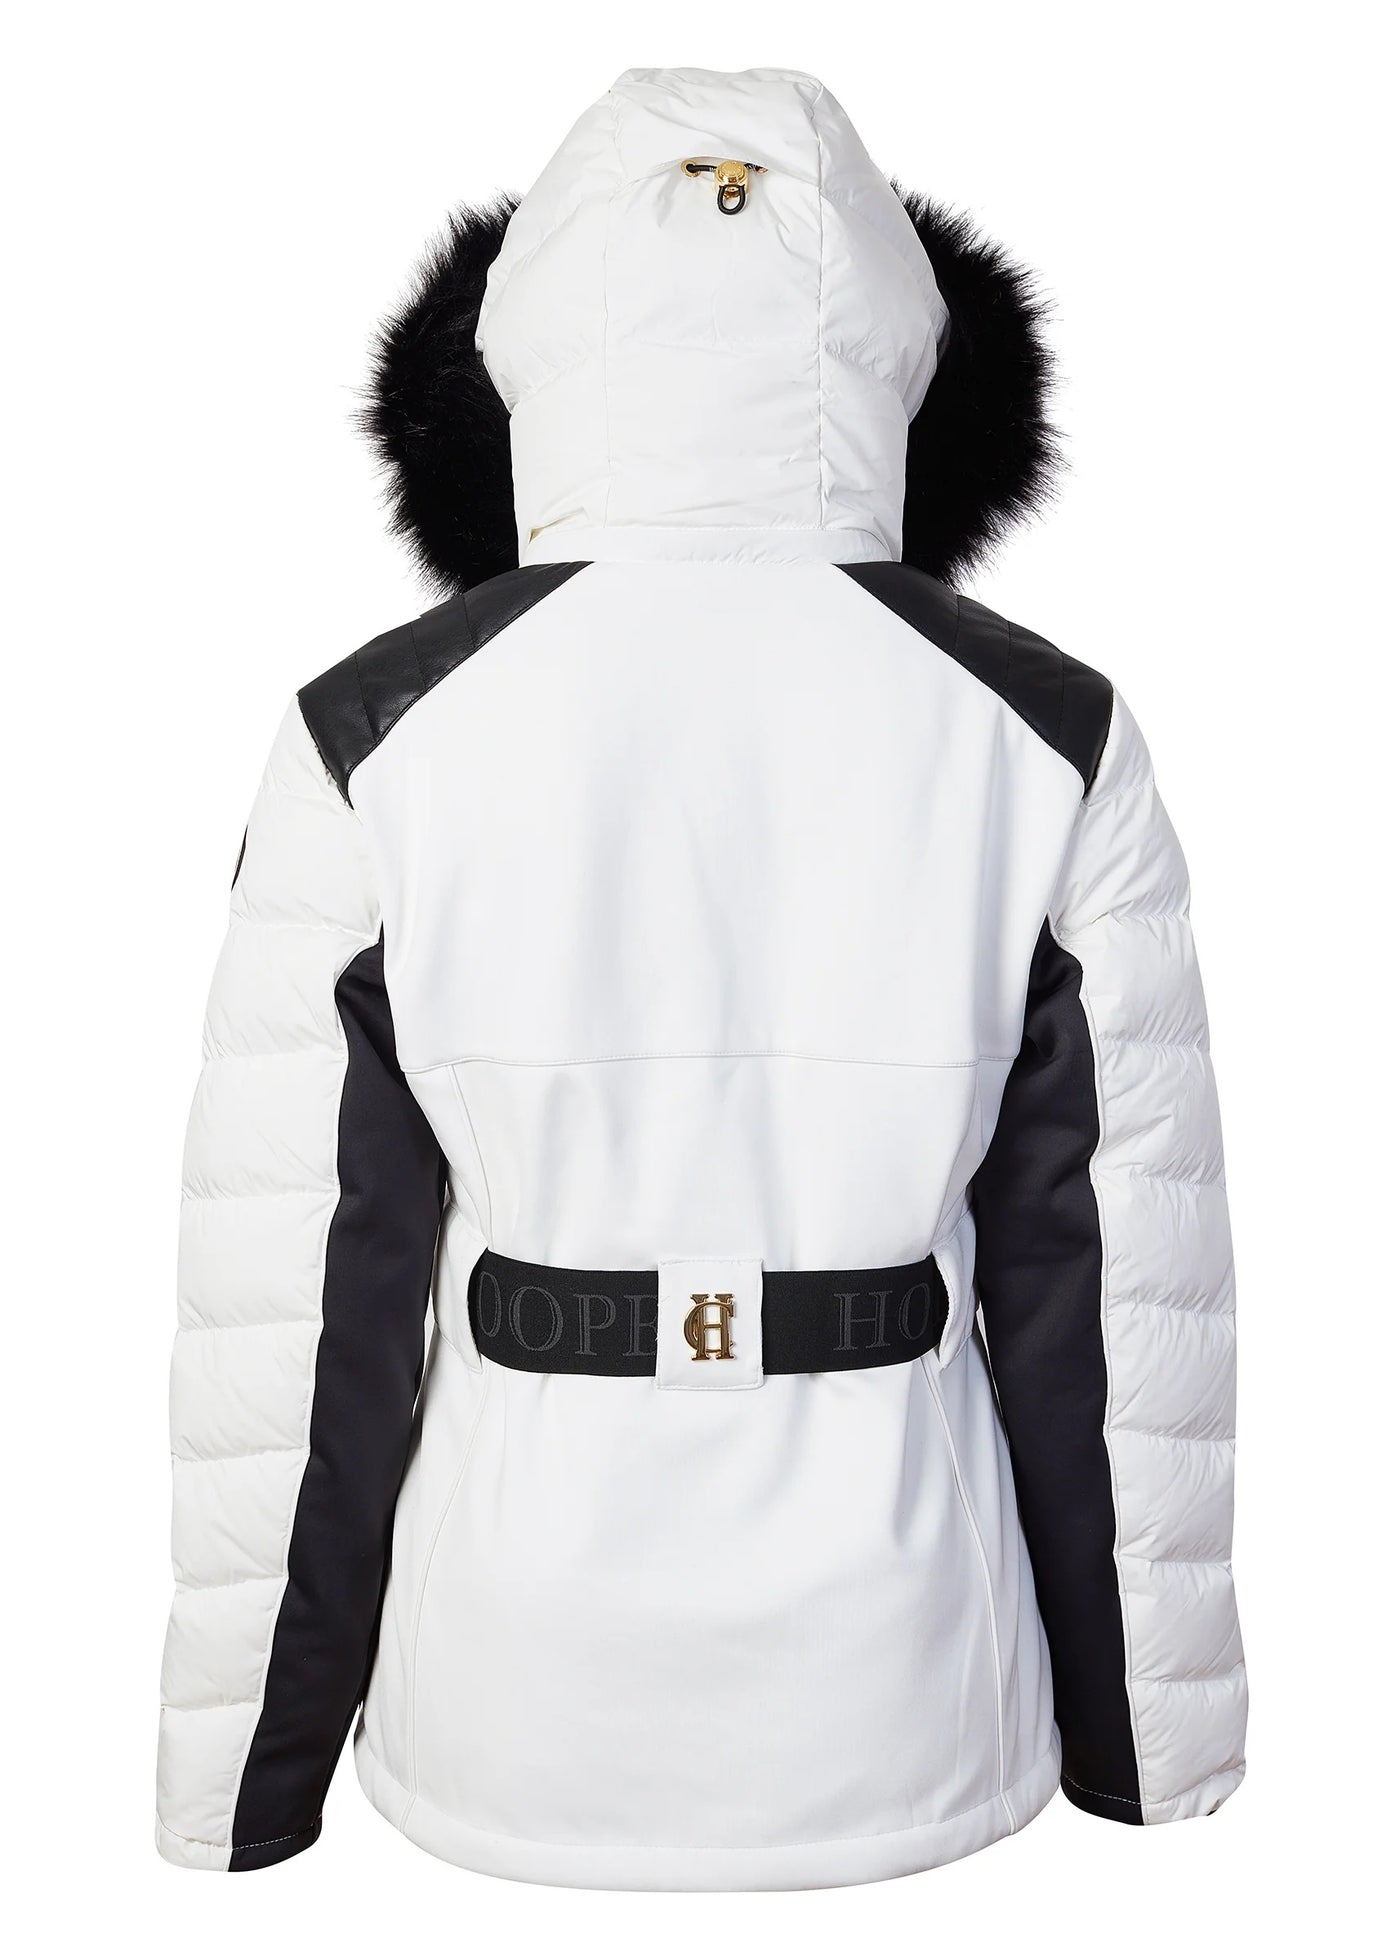 Holland Cooper Ski Jacket in White Back